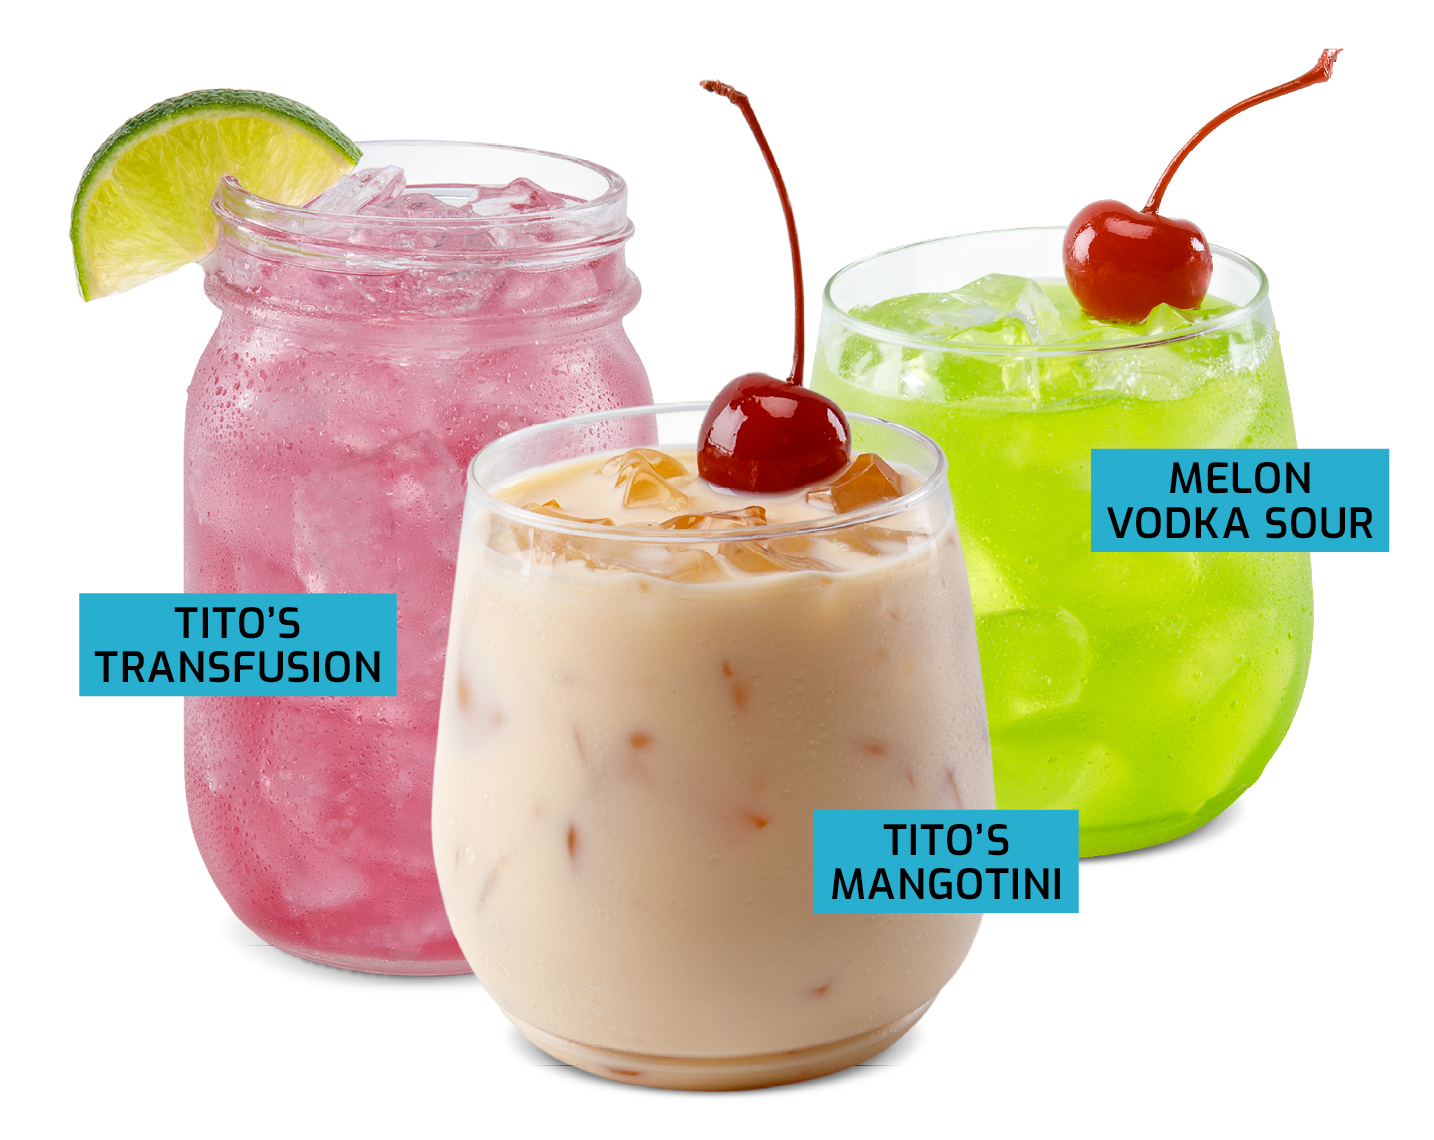 picture of titos transfusion, titos mangotini and mellon sour vodka